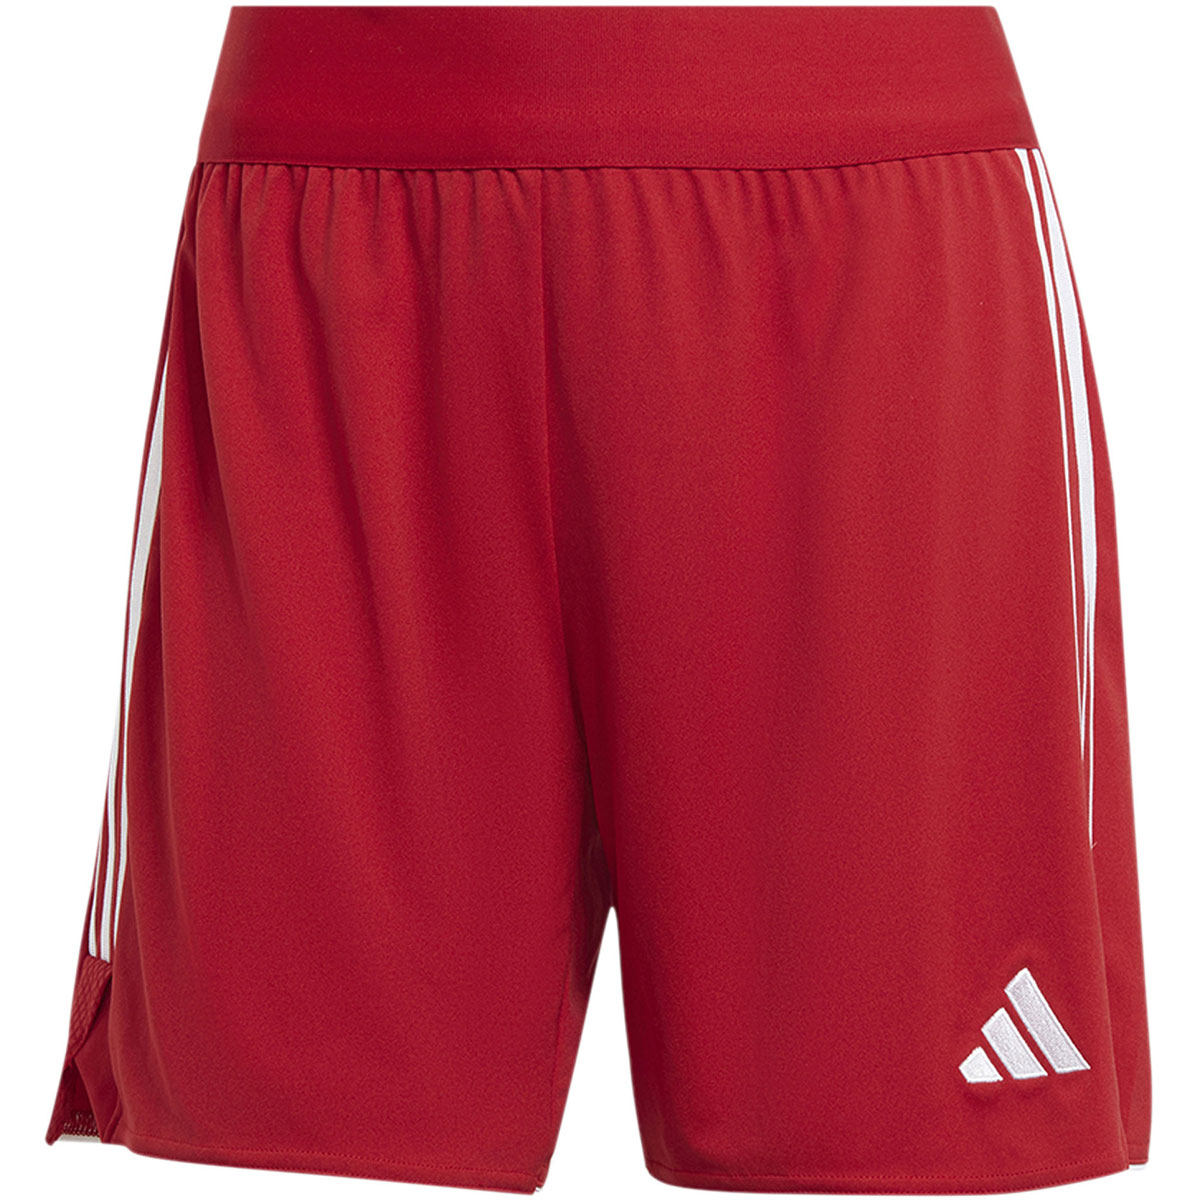 Adidas Damen Shorts Tiro 23 rot-weiß